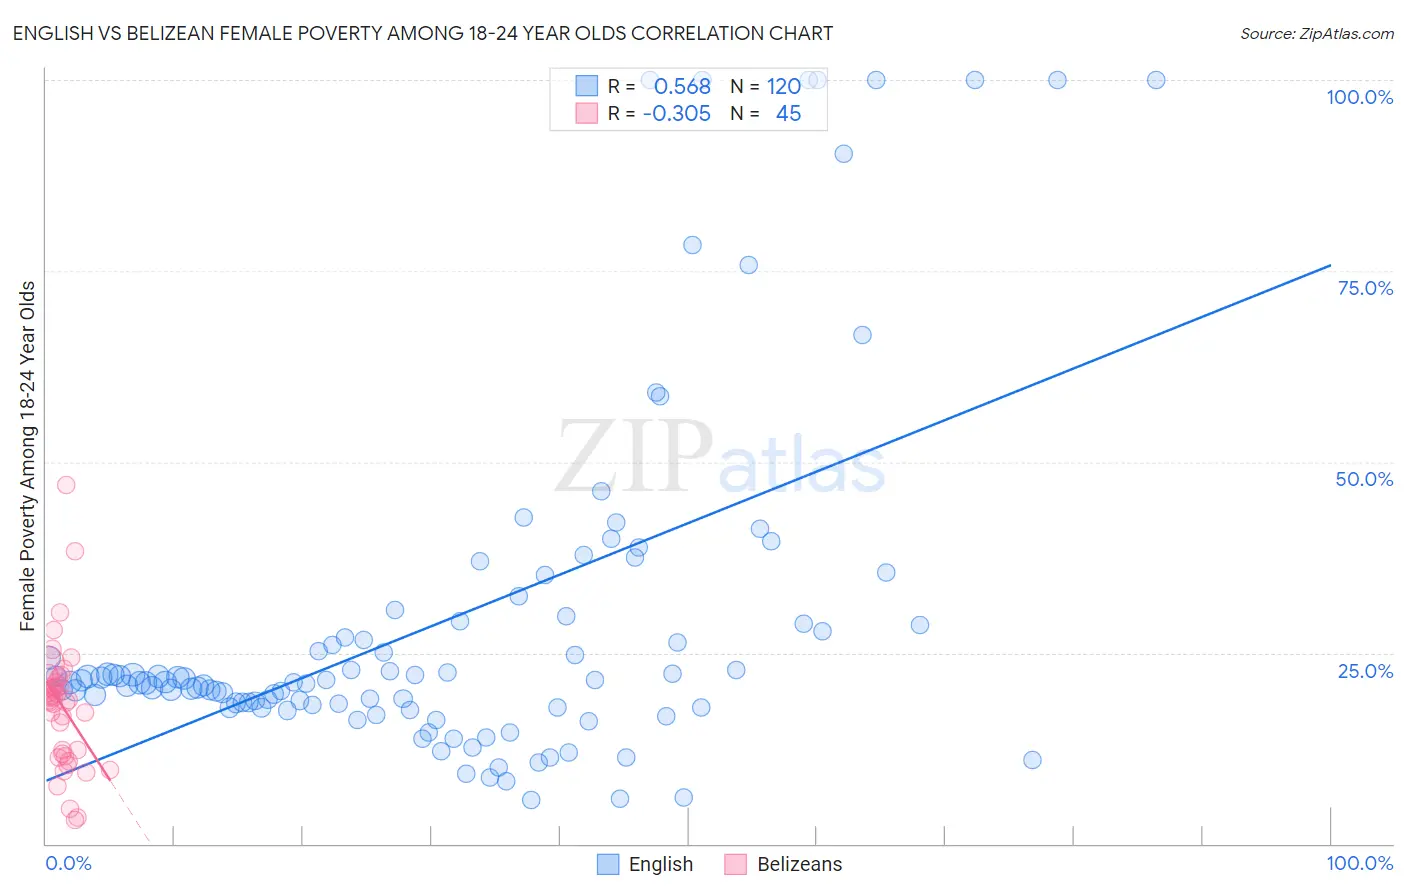 English vs Belizean Female Poverty Among 18-24 Year Olds